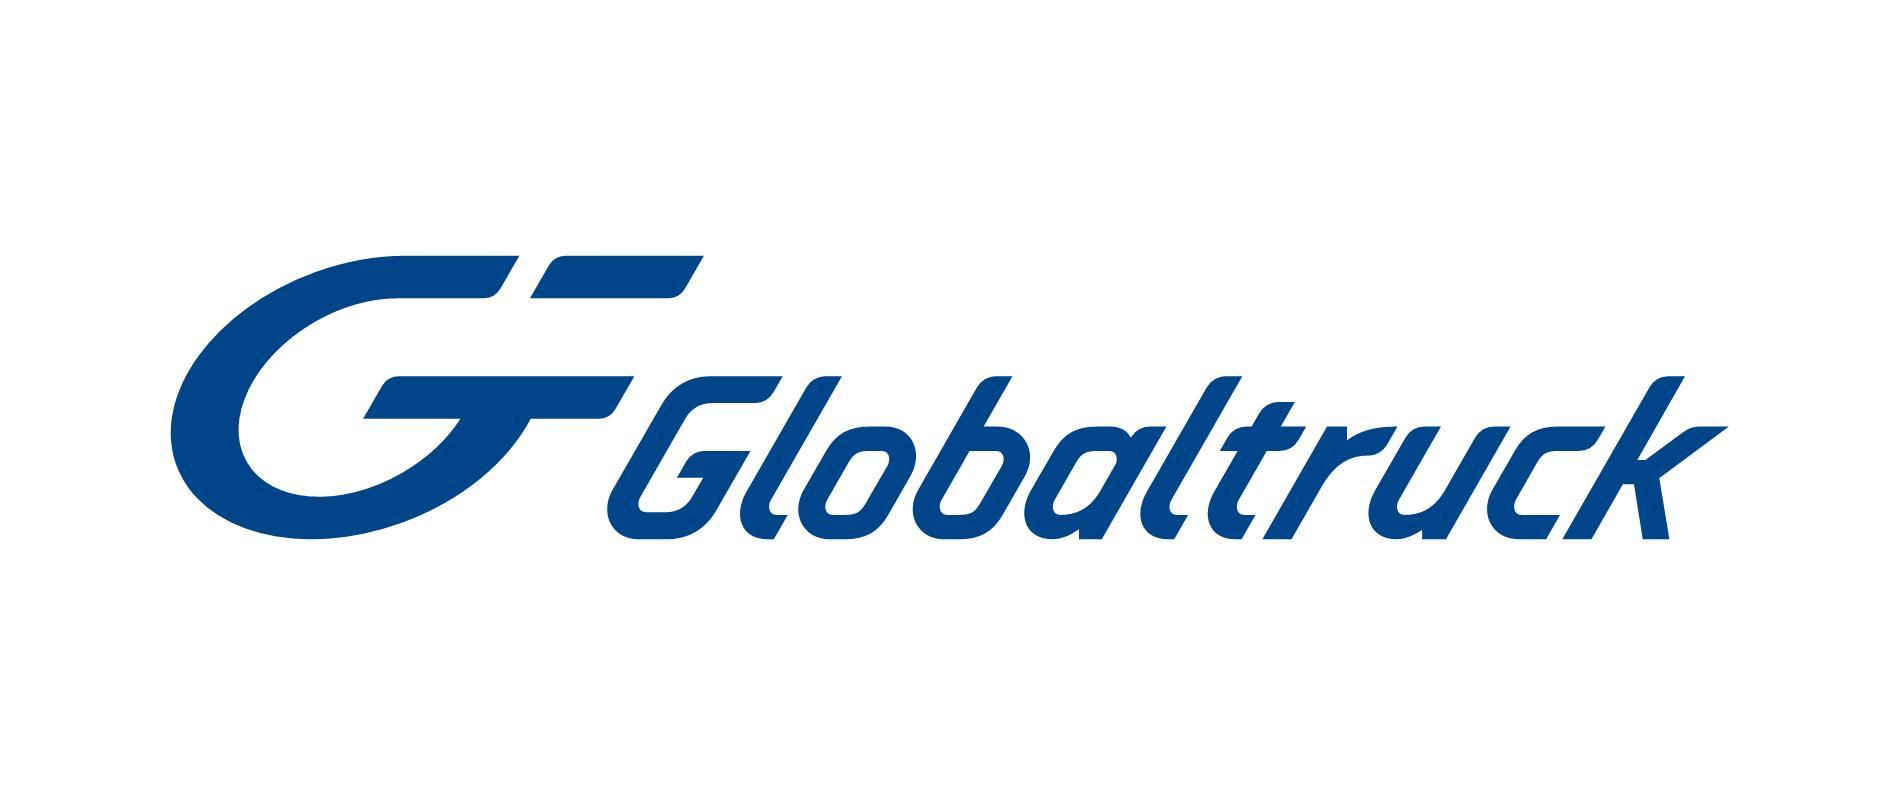 Globaltruck Management - Глобалтрак менеджмент - Глобалтрак лоджистик